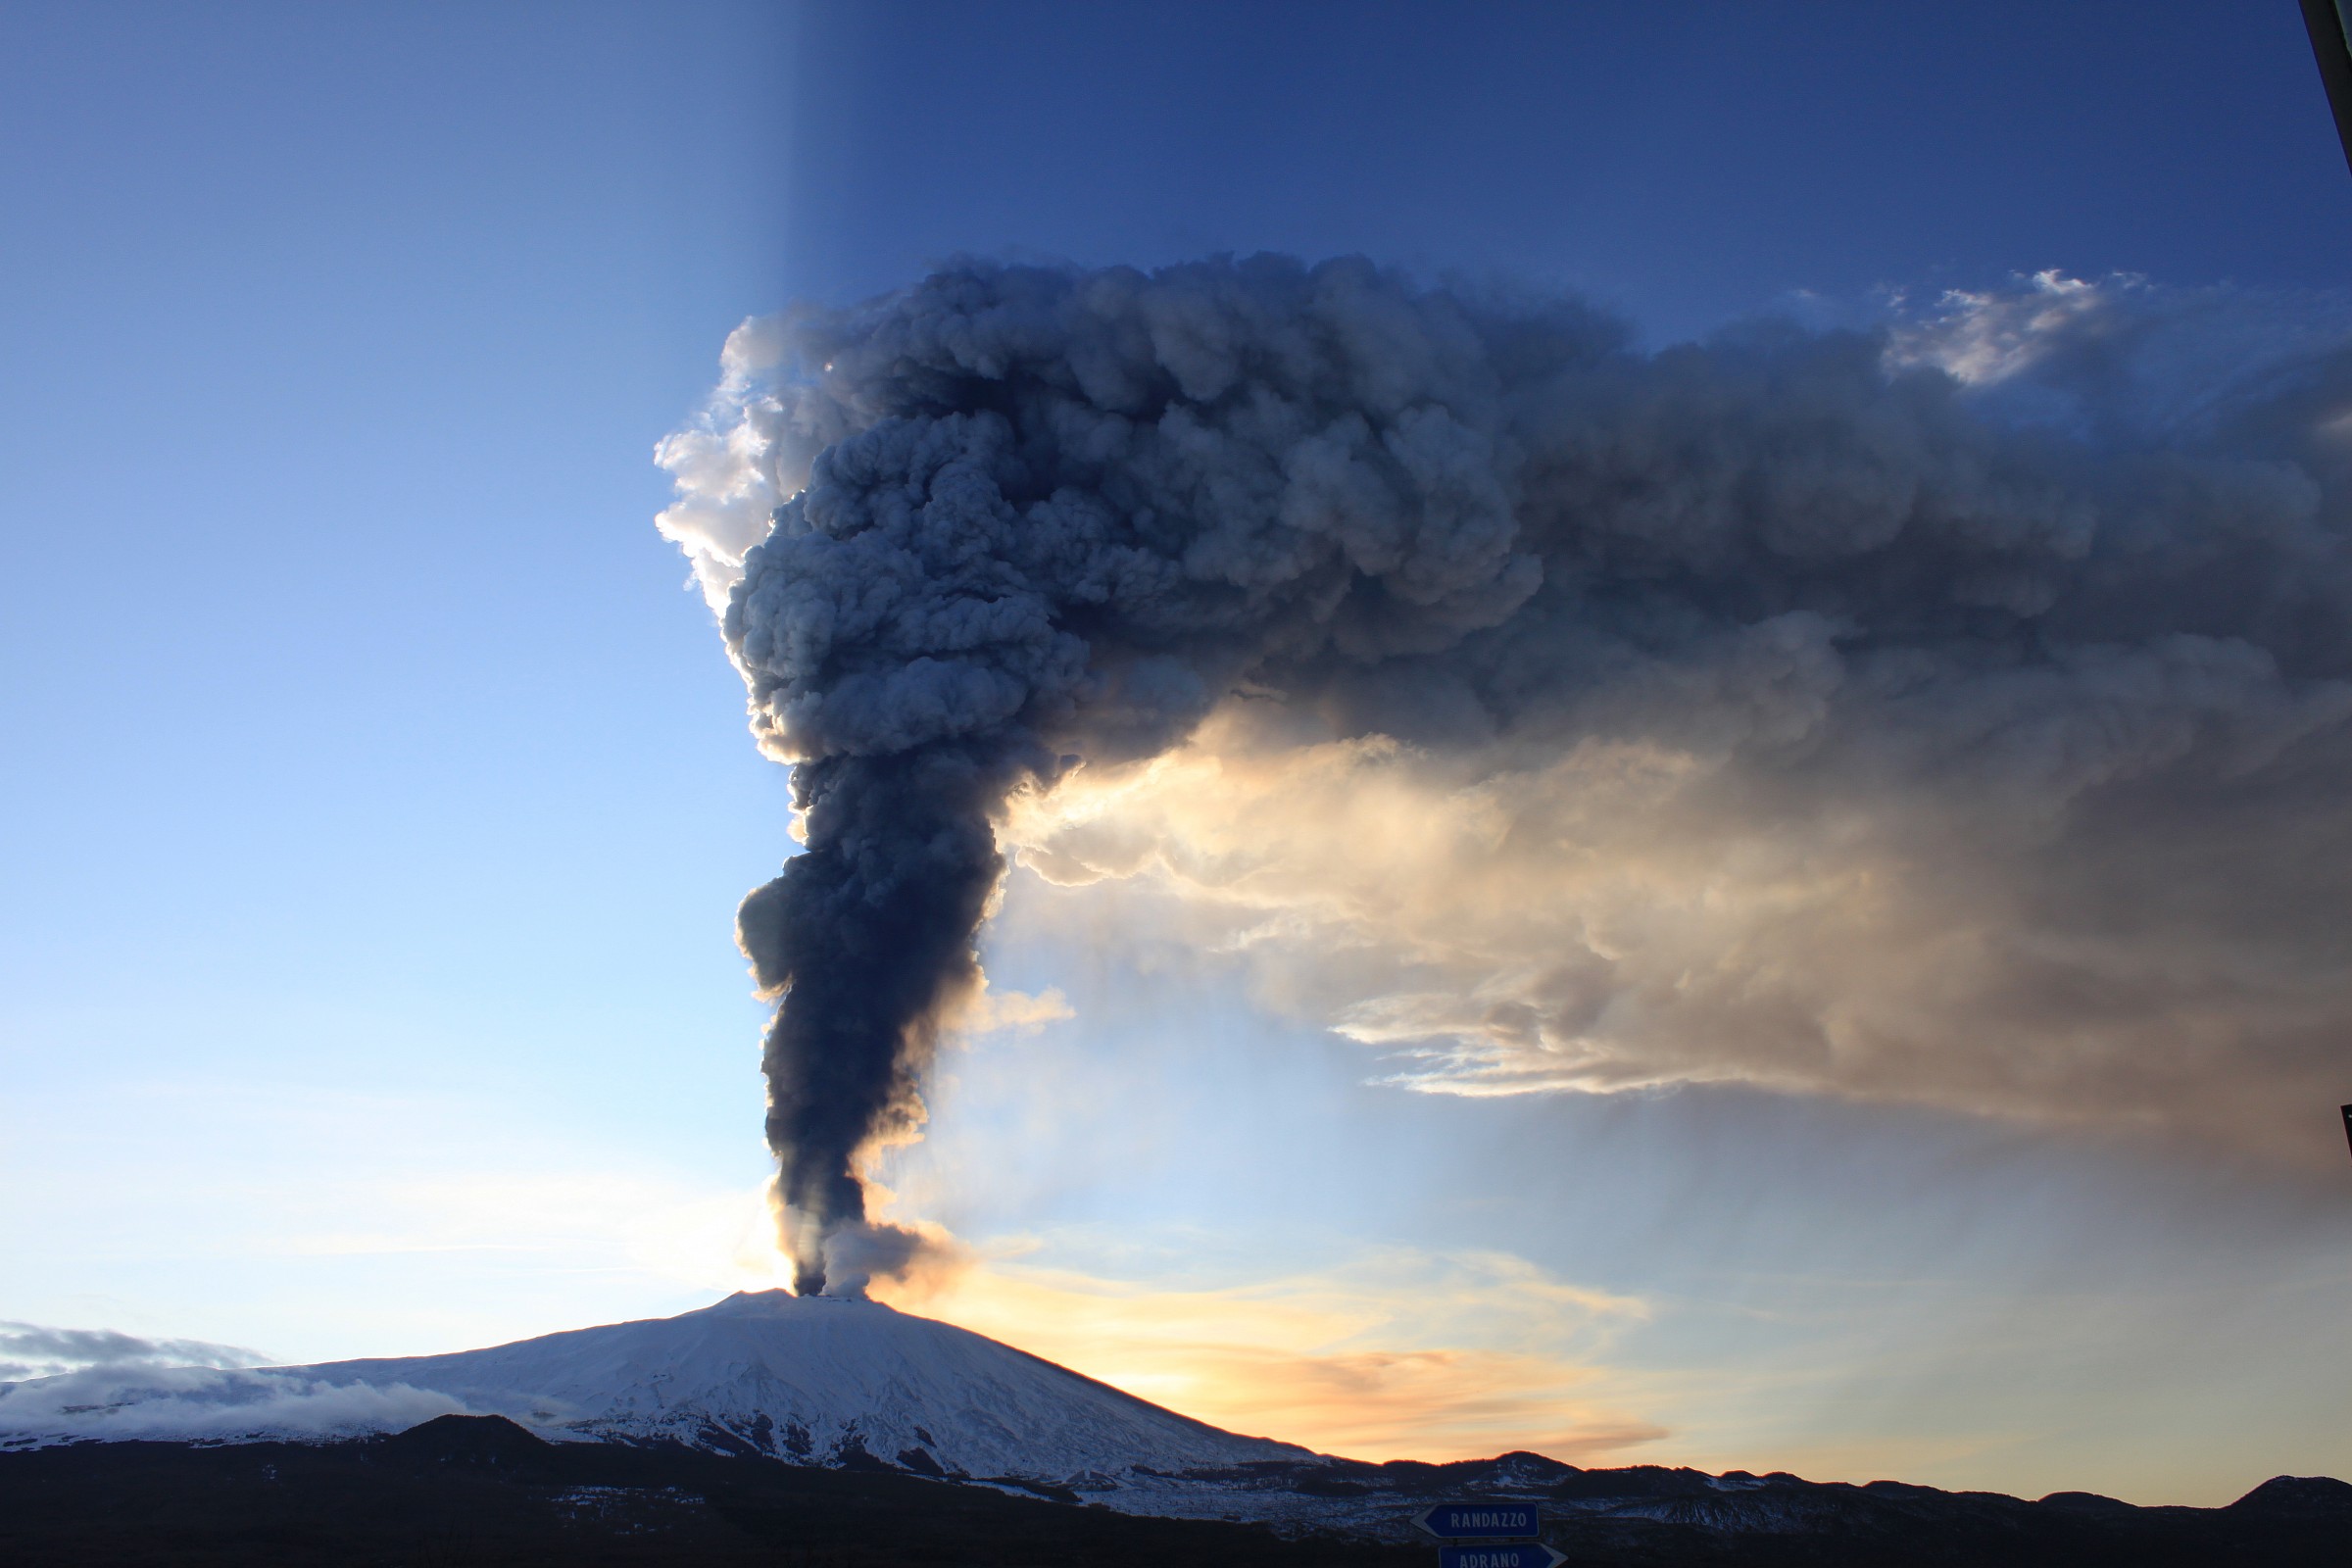 etna 6000 metri di fumata eruttiva...